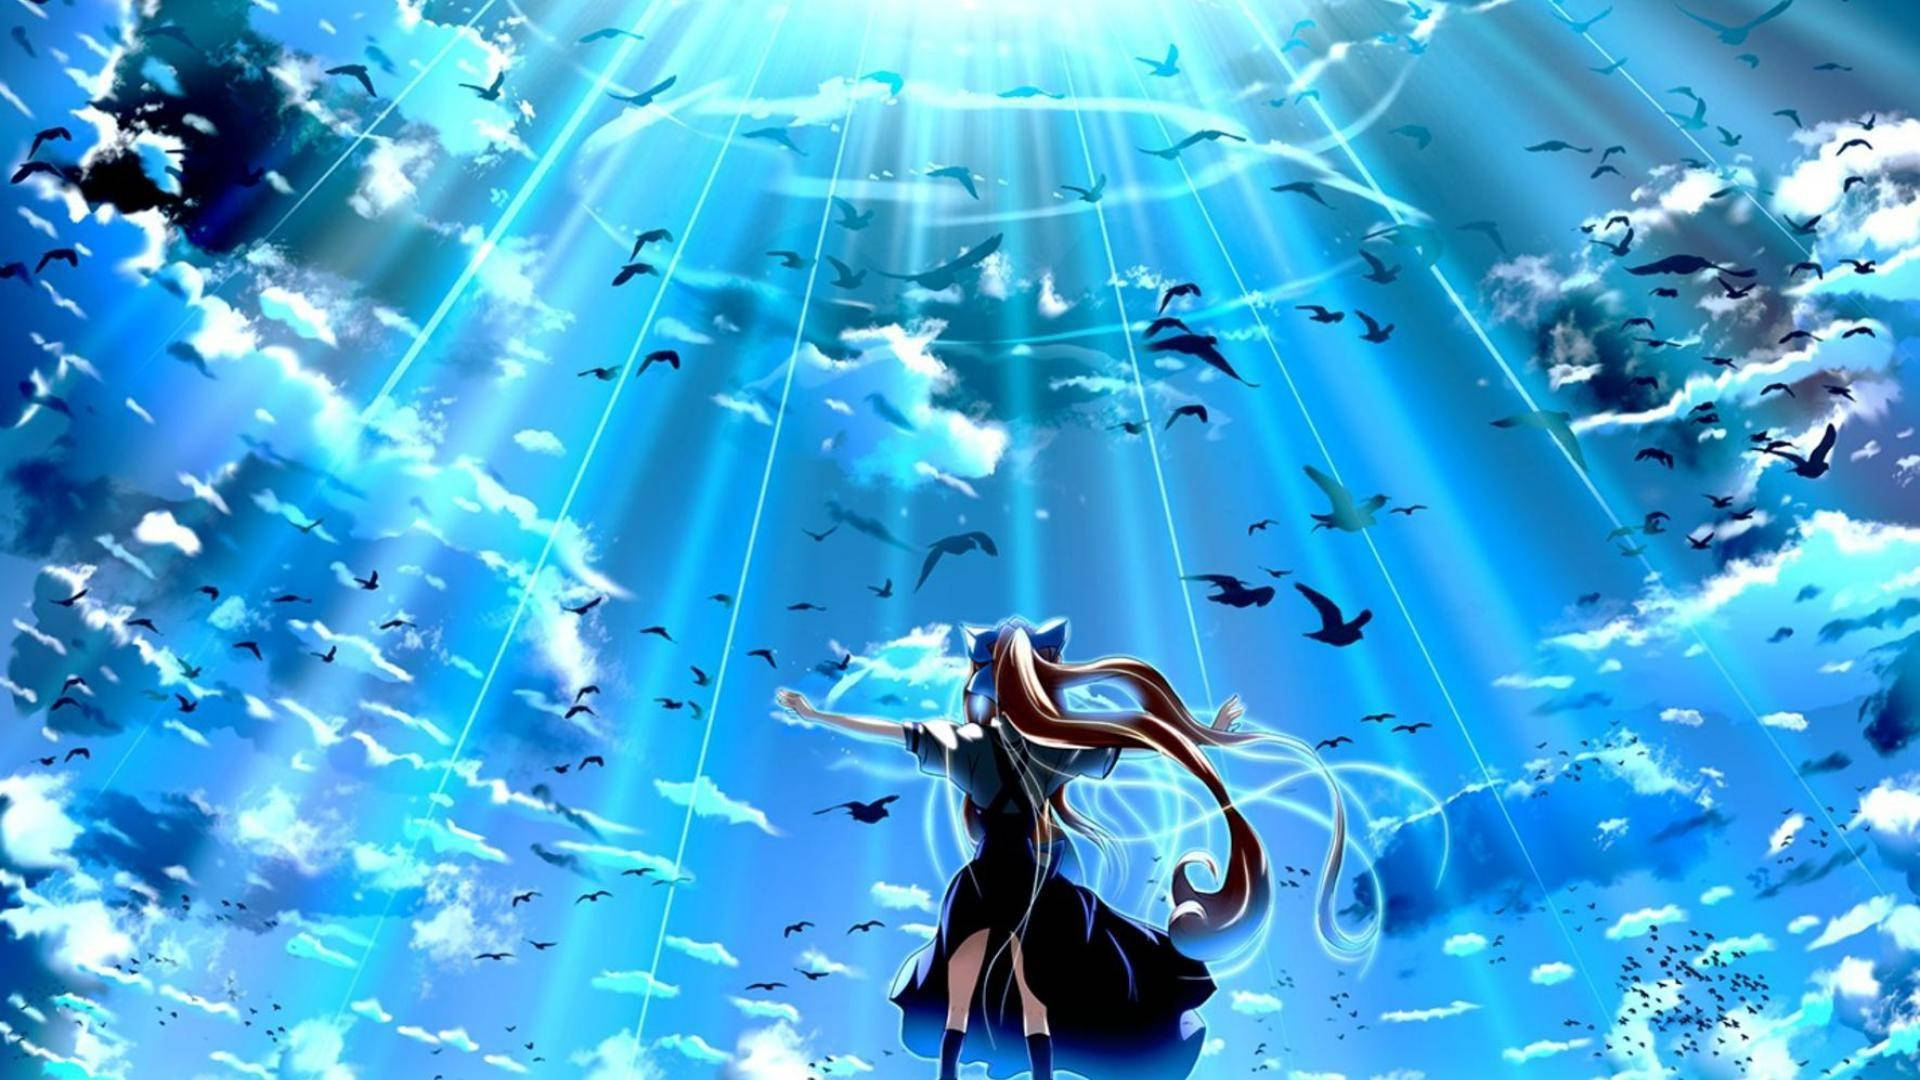 Anime Blue Girl Birds In Sky Background